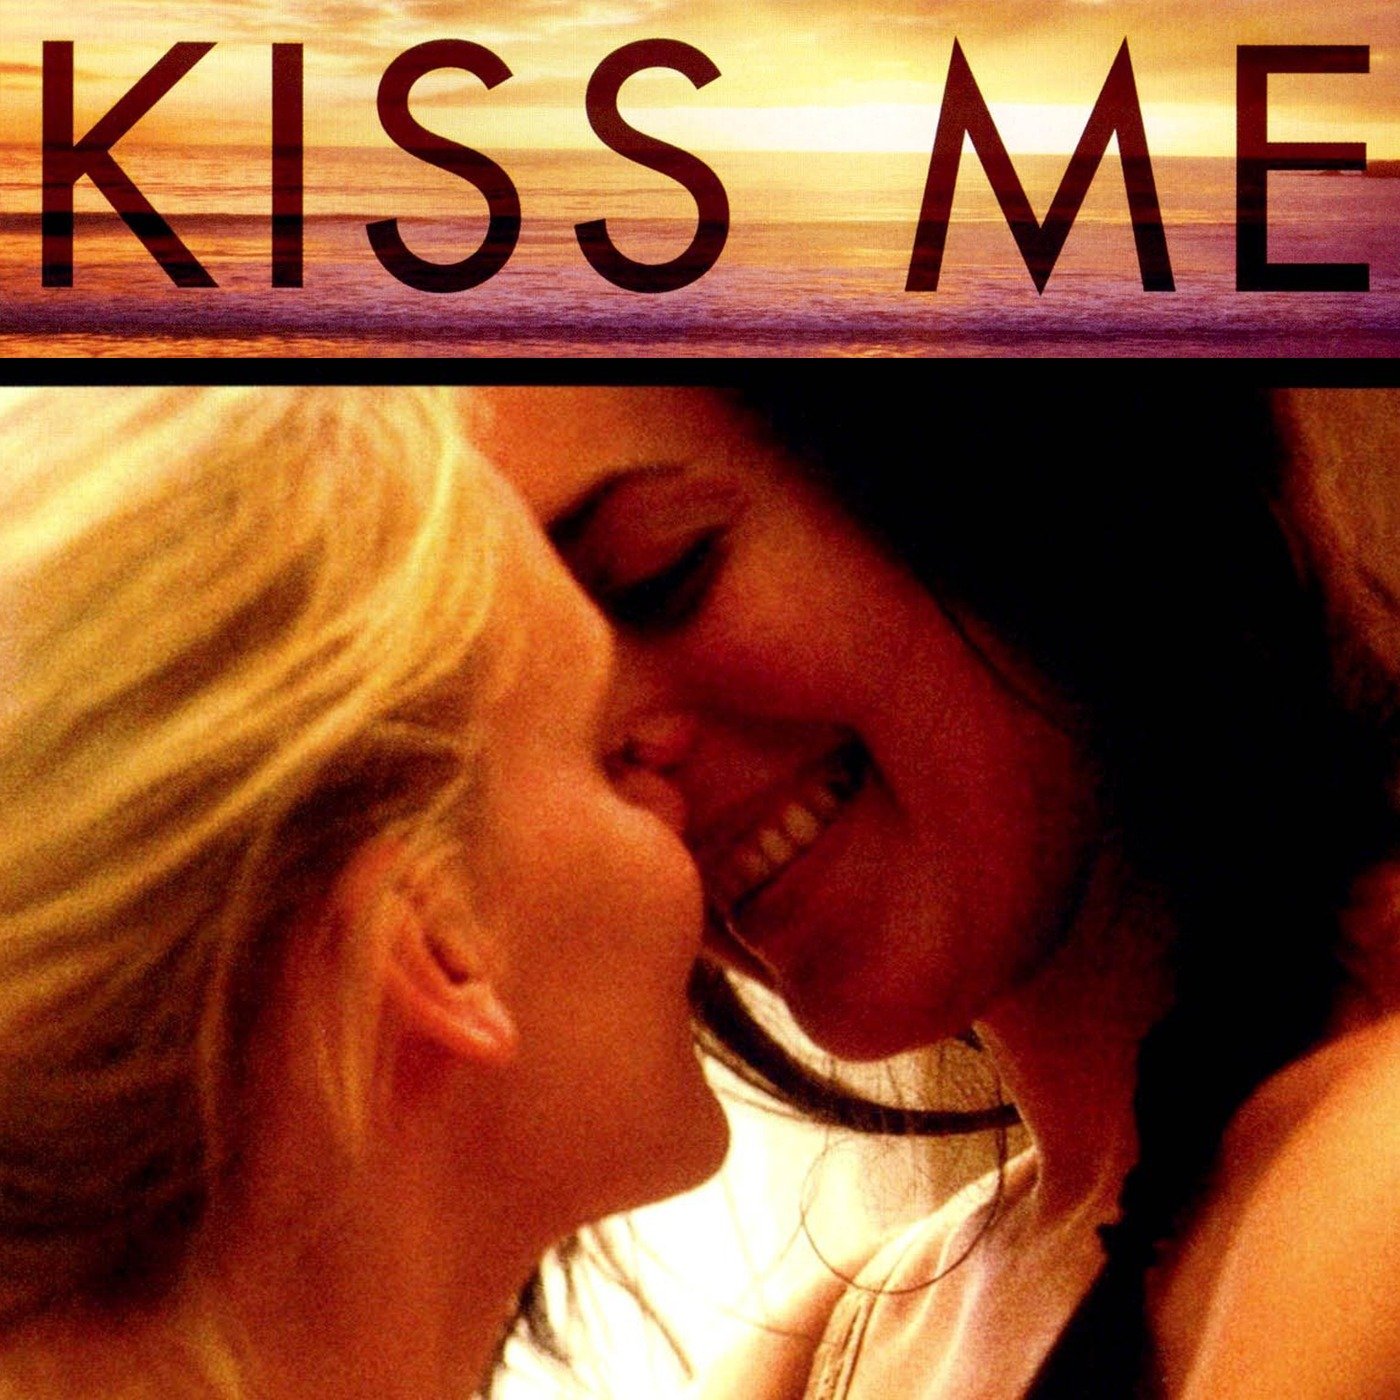 kiss me 2014 full movie